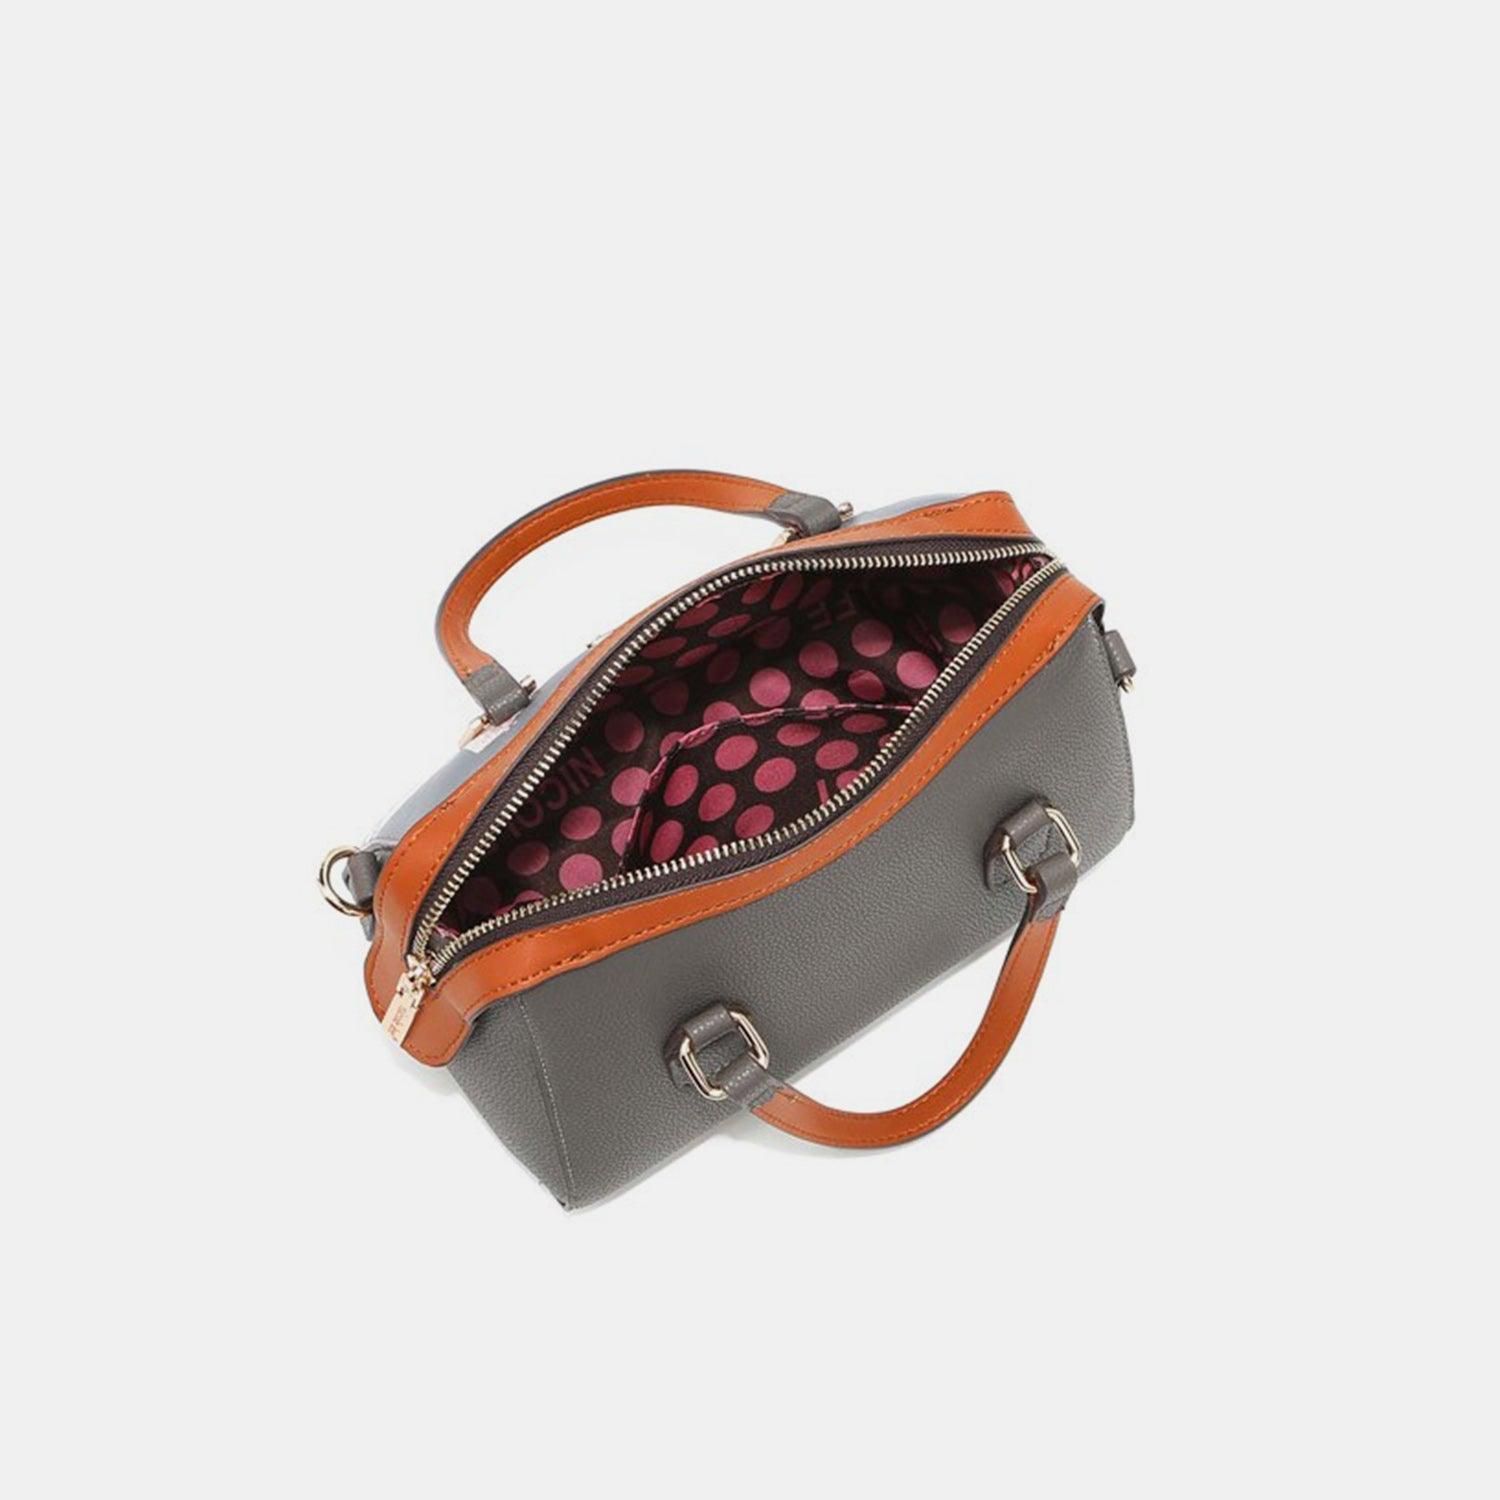 a gray and orange handbag with a polka dot design